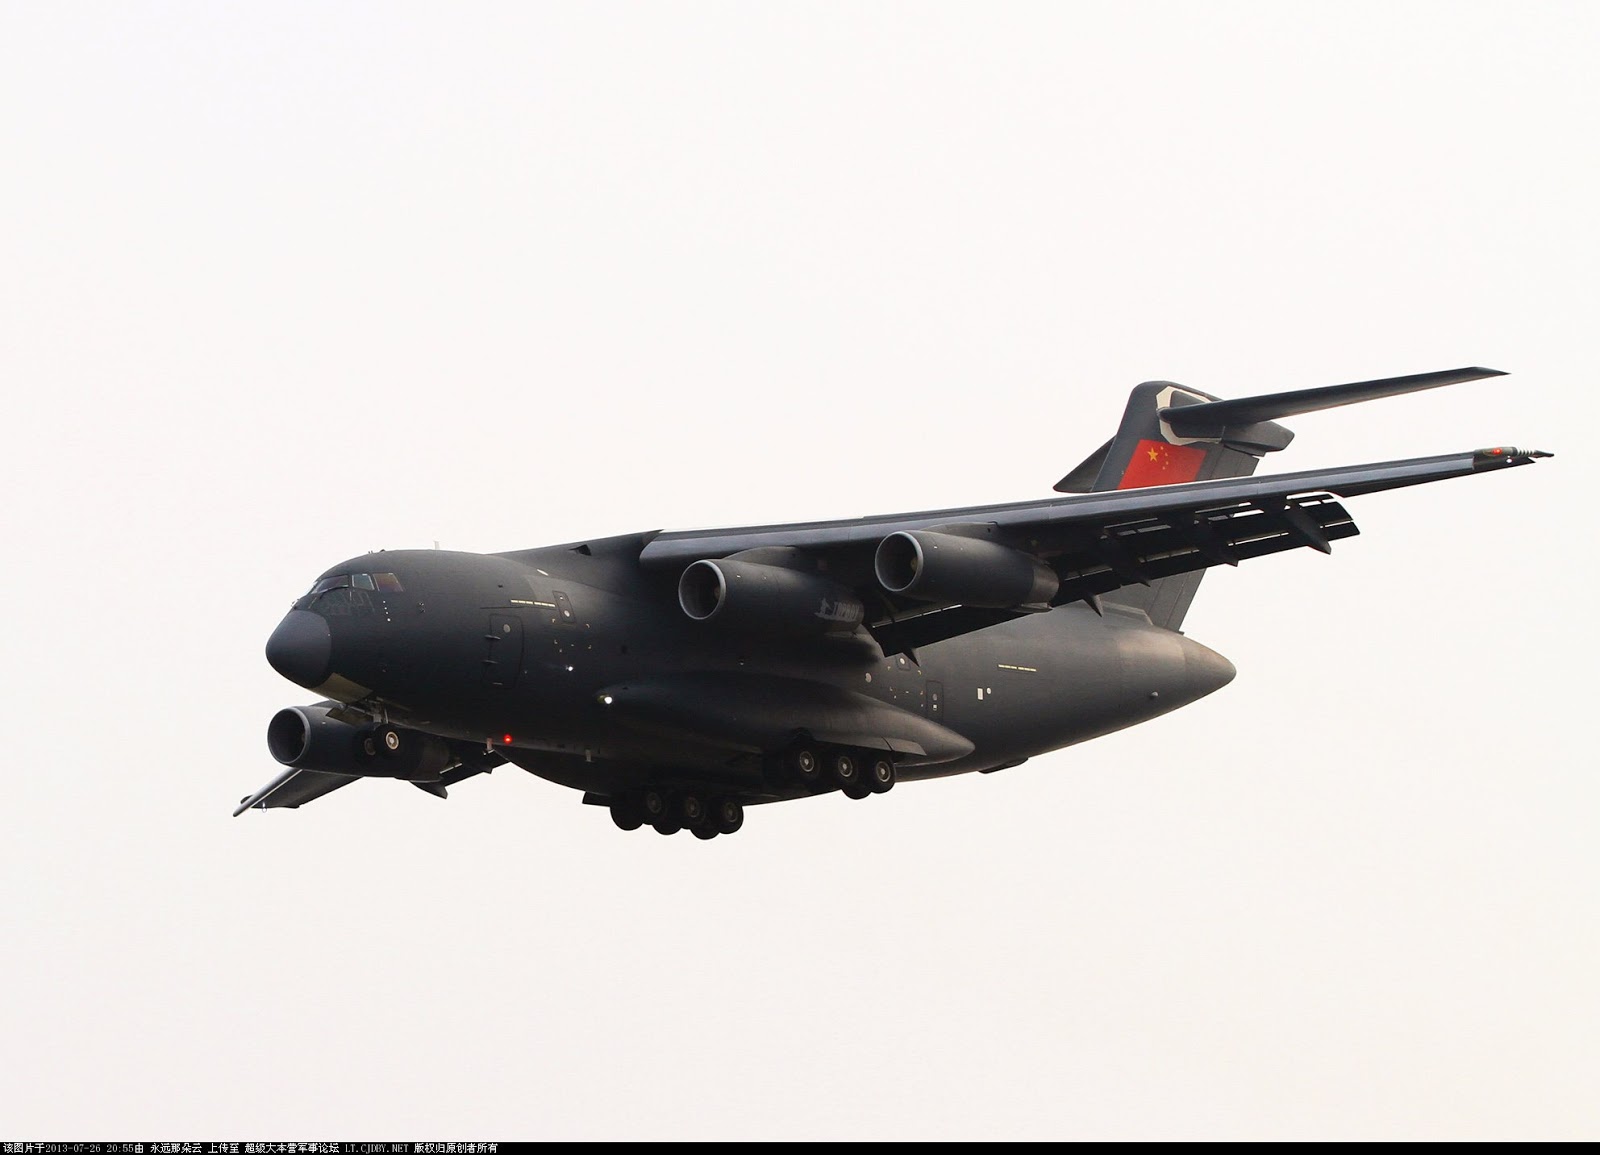 http://3.bp.blogspot.com/-flZAACeLQ28/UfQ7lybarcI/AAAAAAAAbbE/1hbY-4Npgy0/s1600/Y-20+China+Future+Military+Transport+Airplane+china+plaaf+air+force+refueling+aewc+aesa+import+flight+taxing+opertional+cgiexport+russia+pakistan+ws10+12+13+15+20+ps90+il-78+73+476+engine+turbofan++(2).jpg